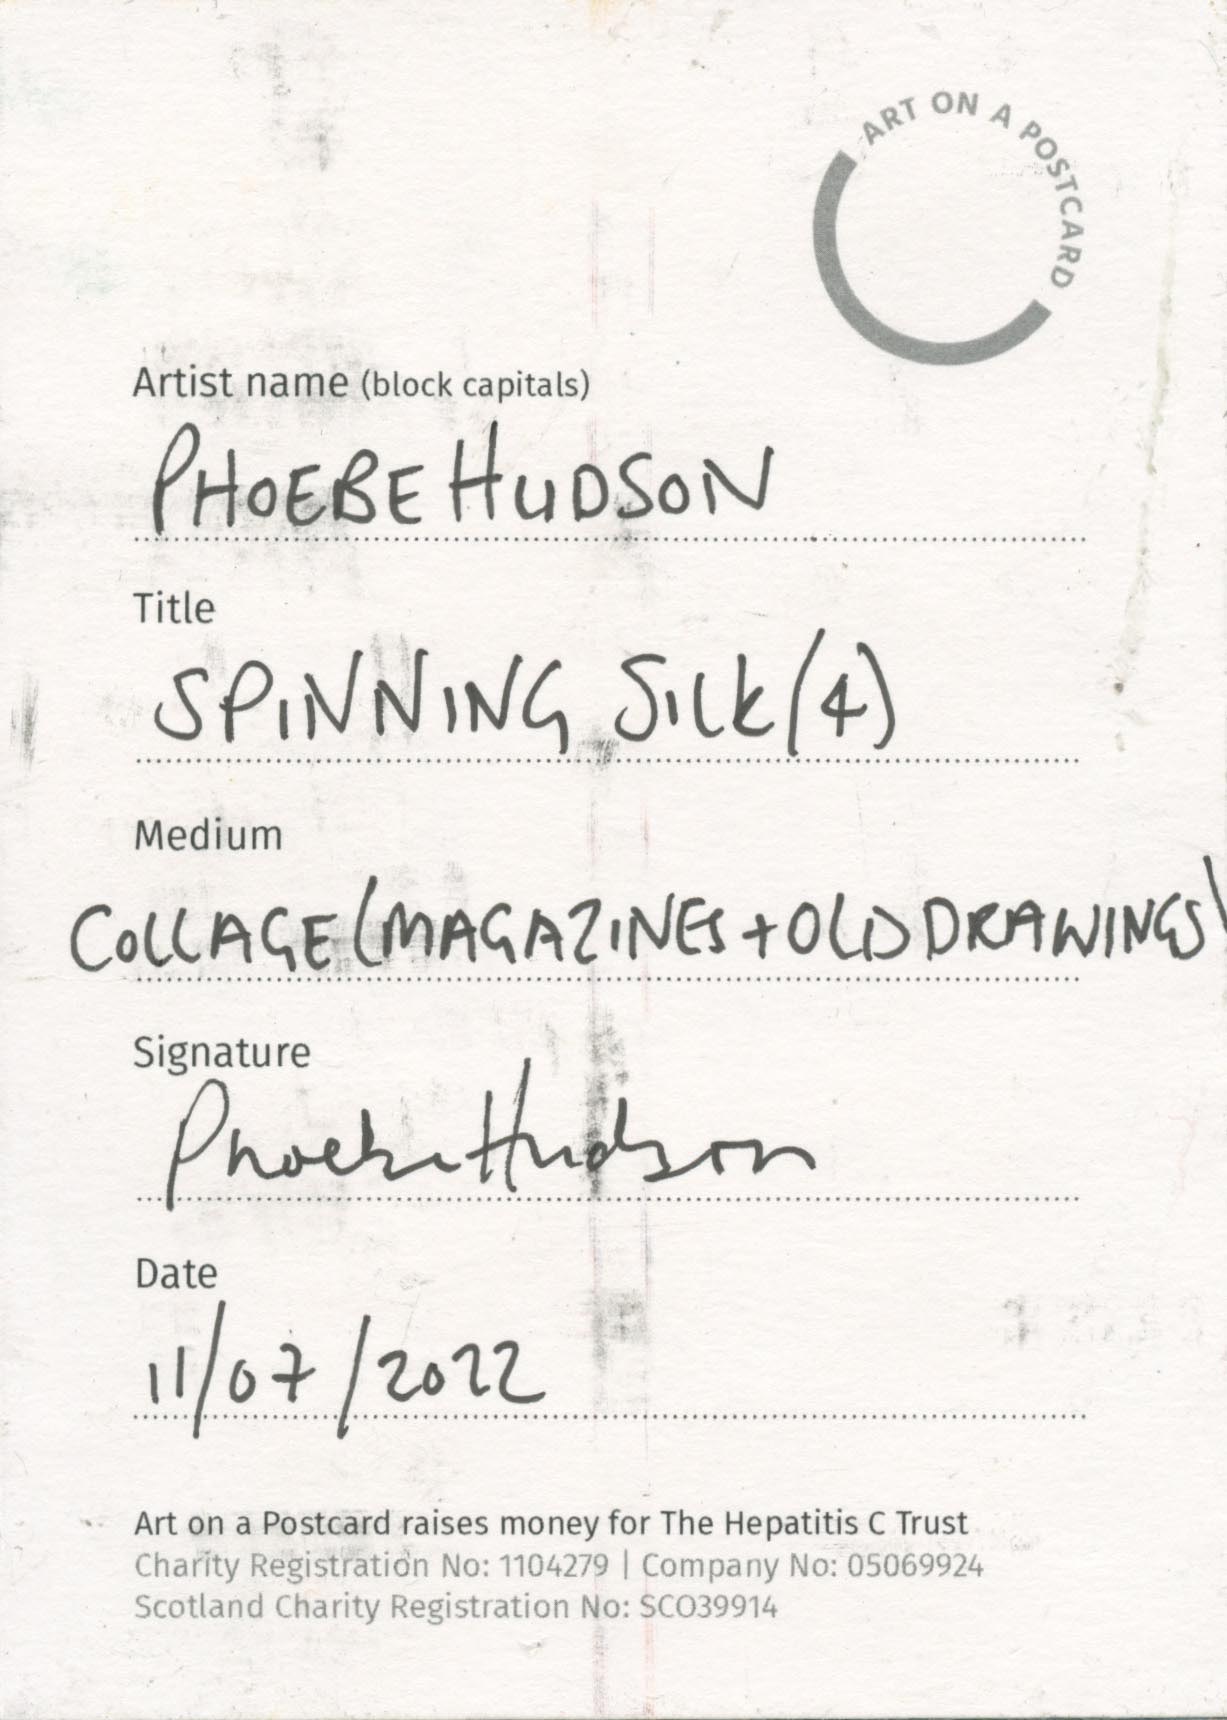 20. Phoebe Hudson - Spinning Silk (4) - BACK